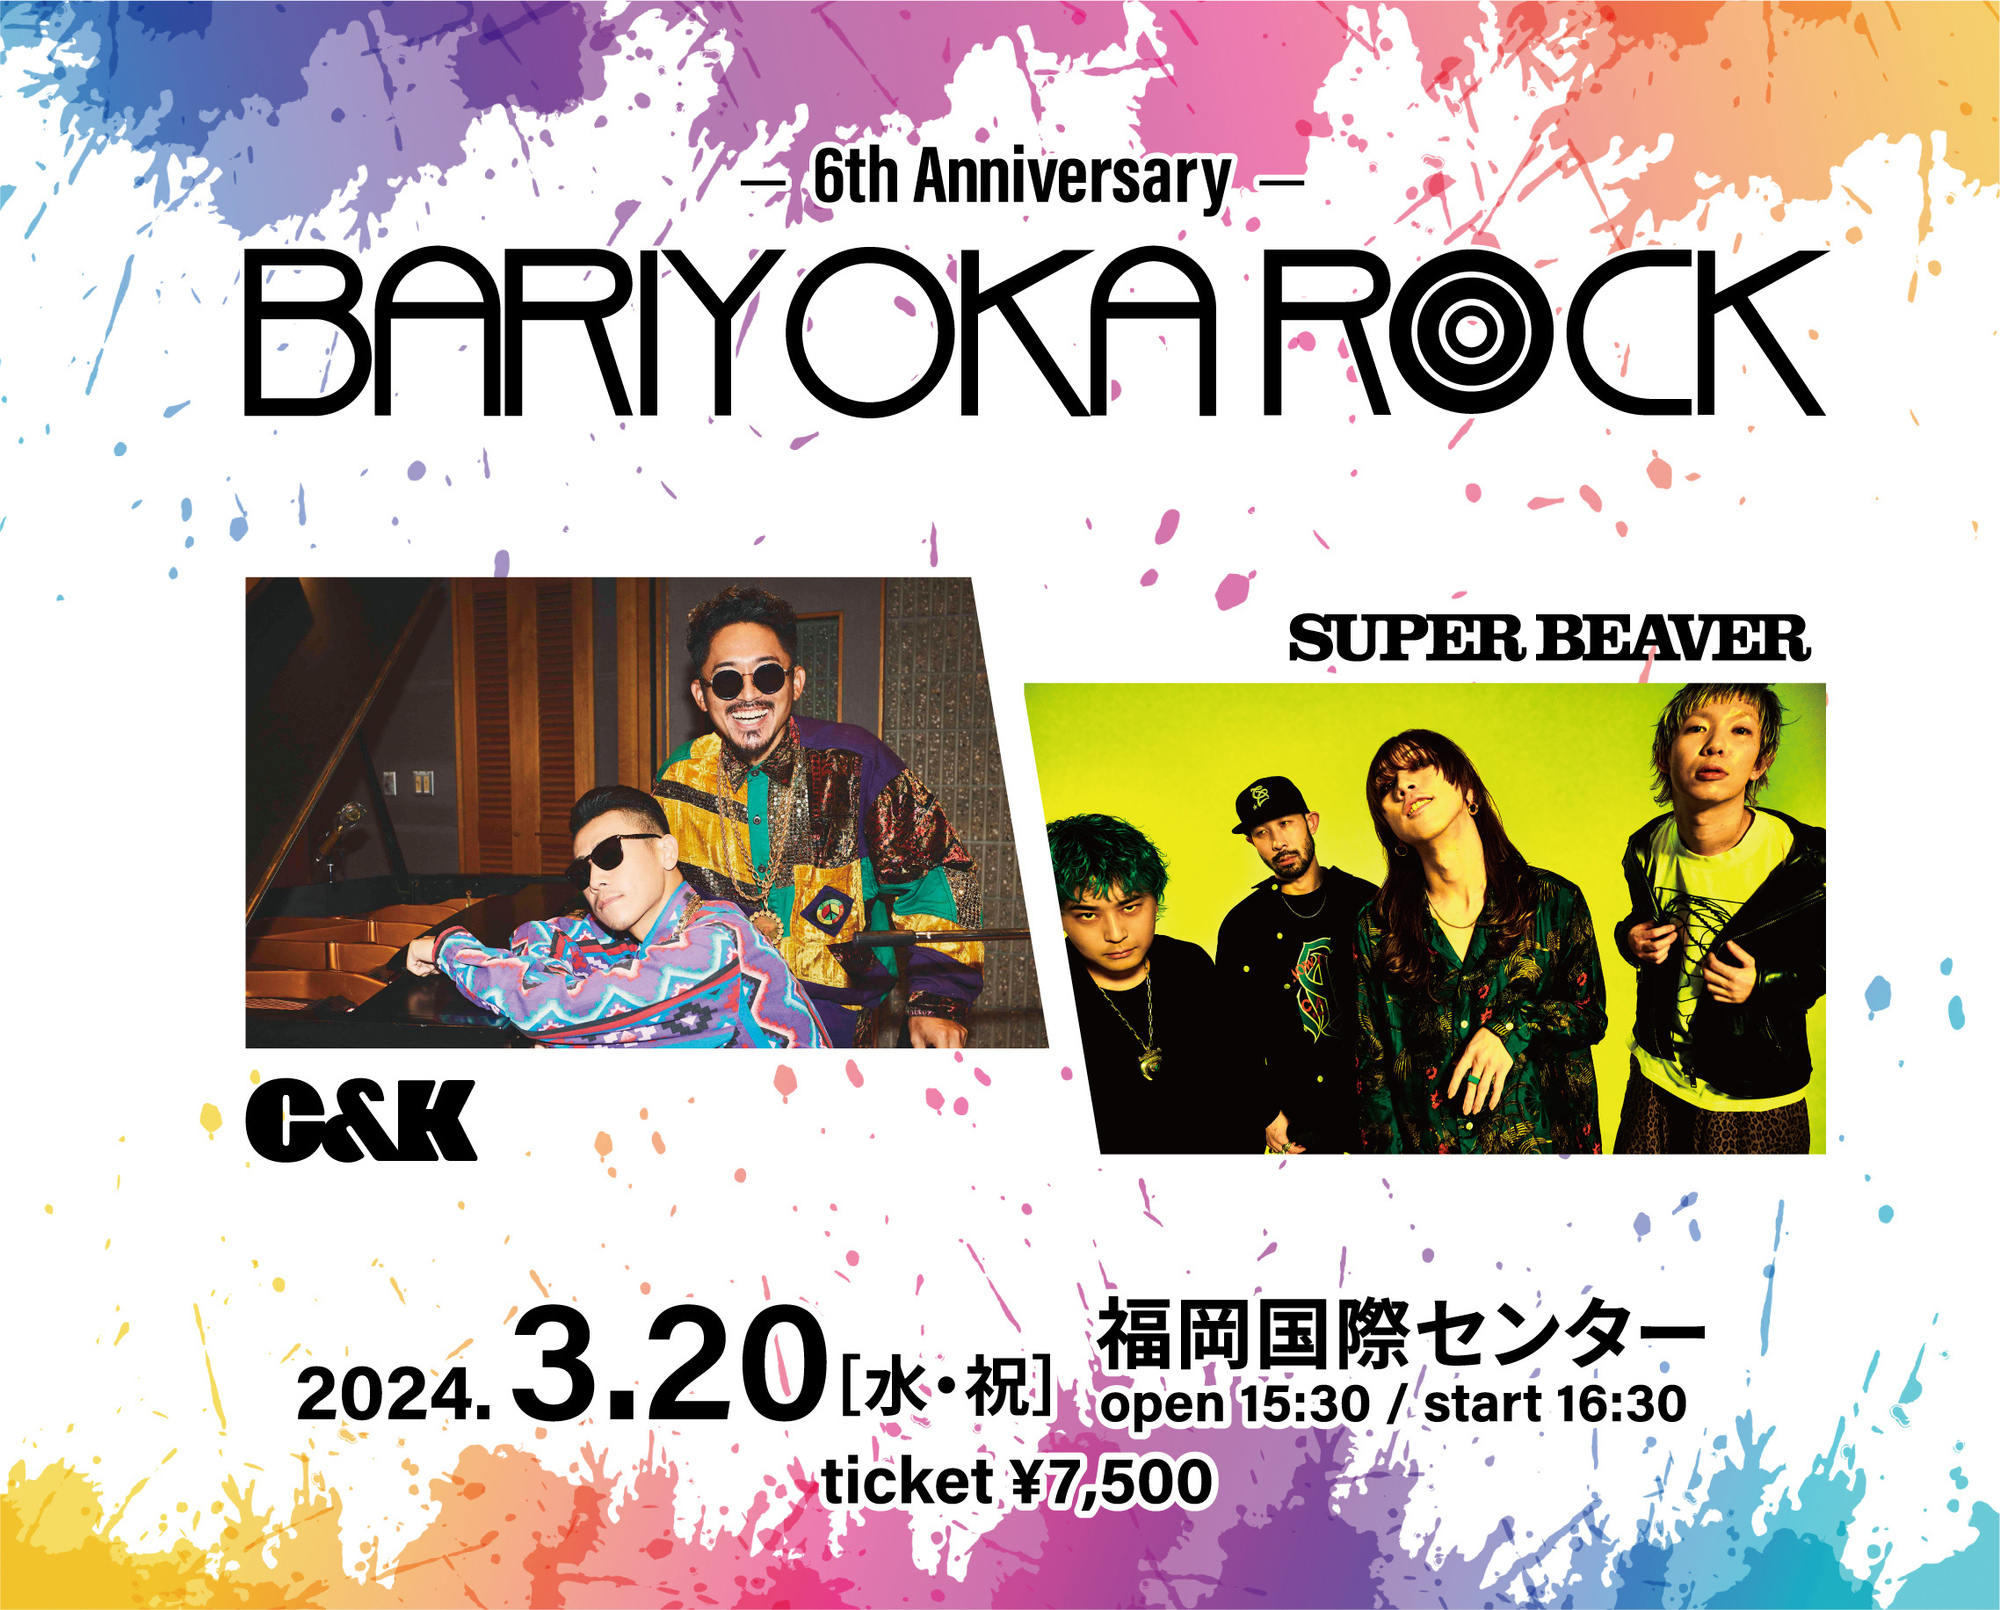 SUPER BEAVERとの2マンライブ「6th anniversary BARIYOKA ROCK」に出演 